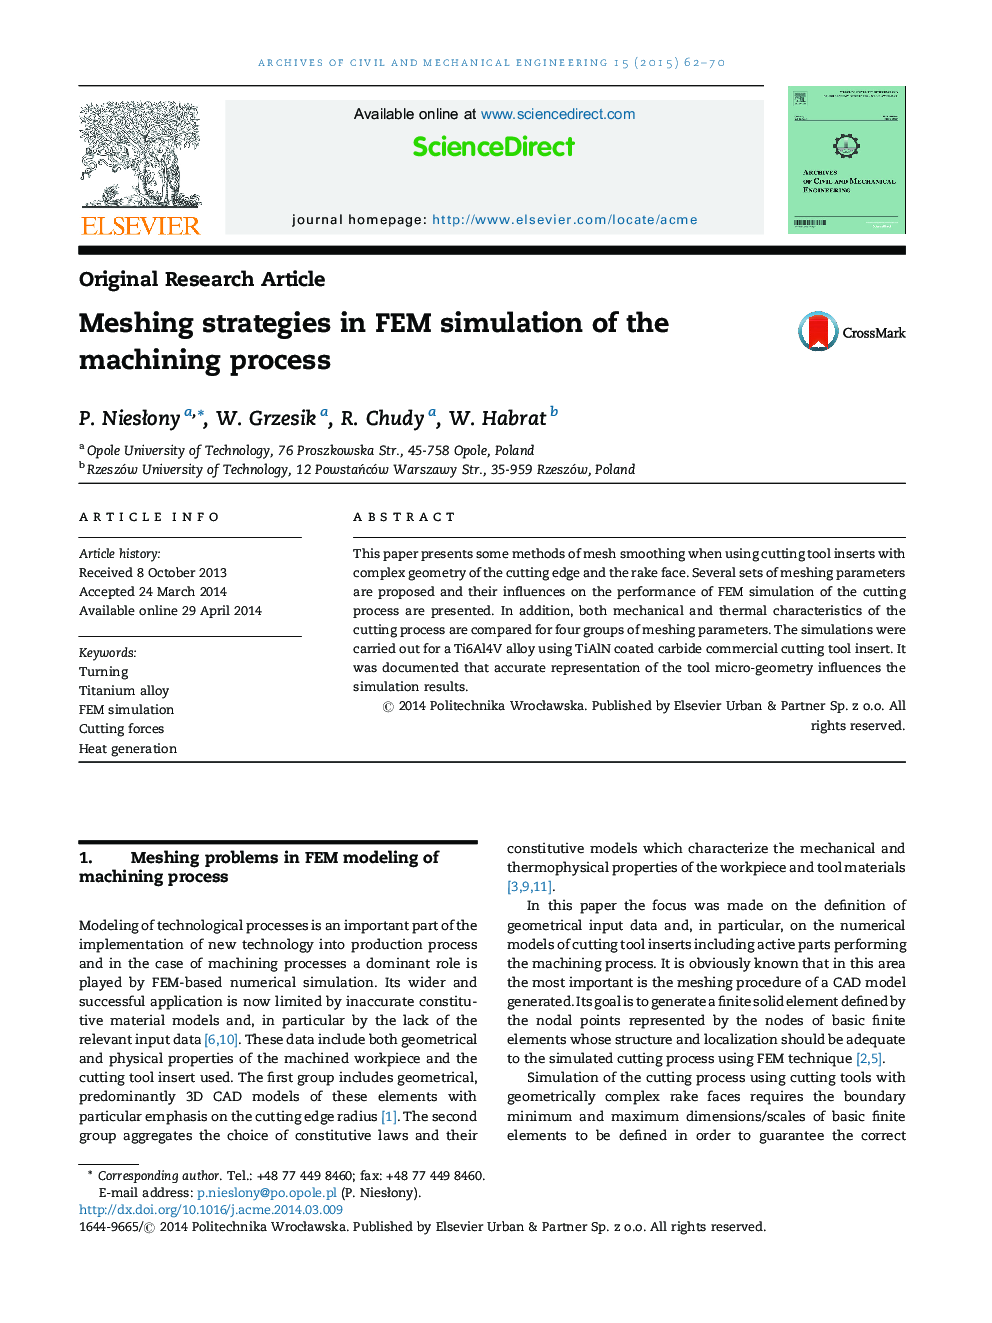 Meshing strategies in FEM simulation of the machining process